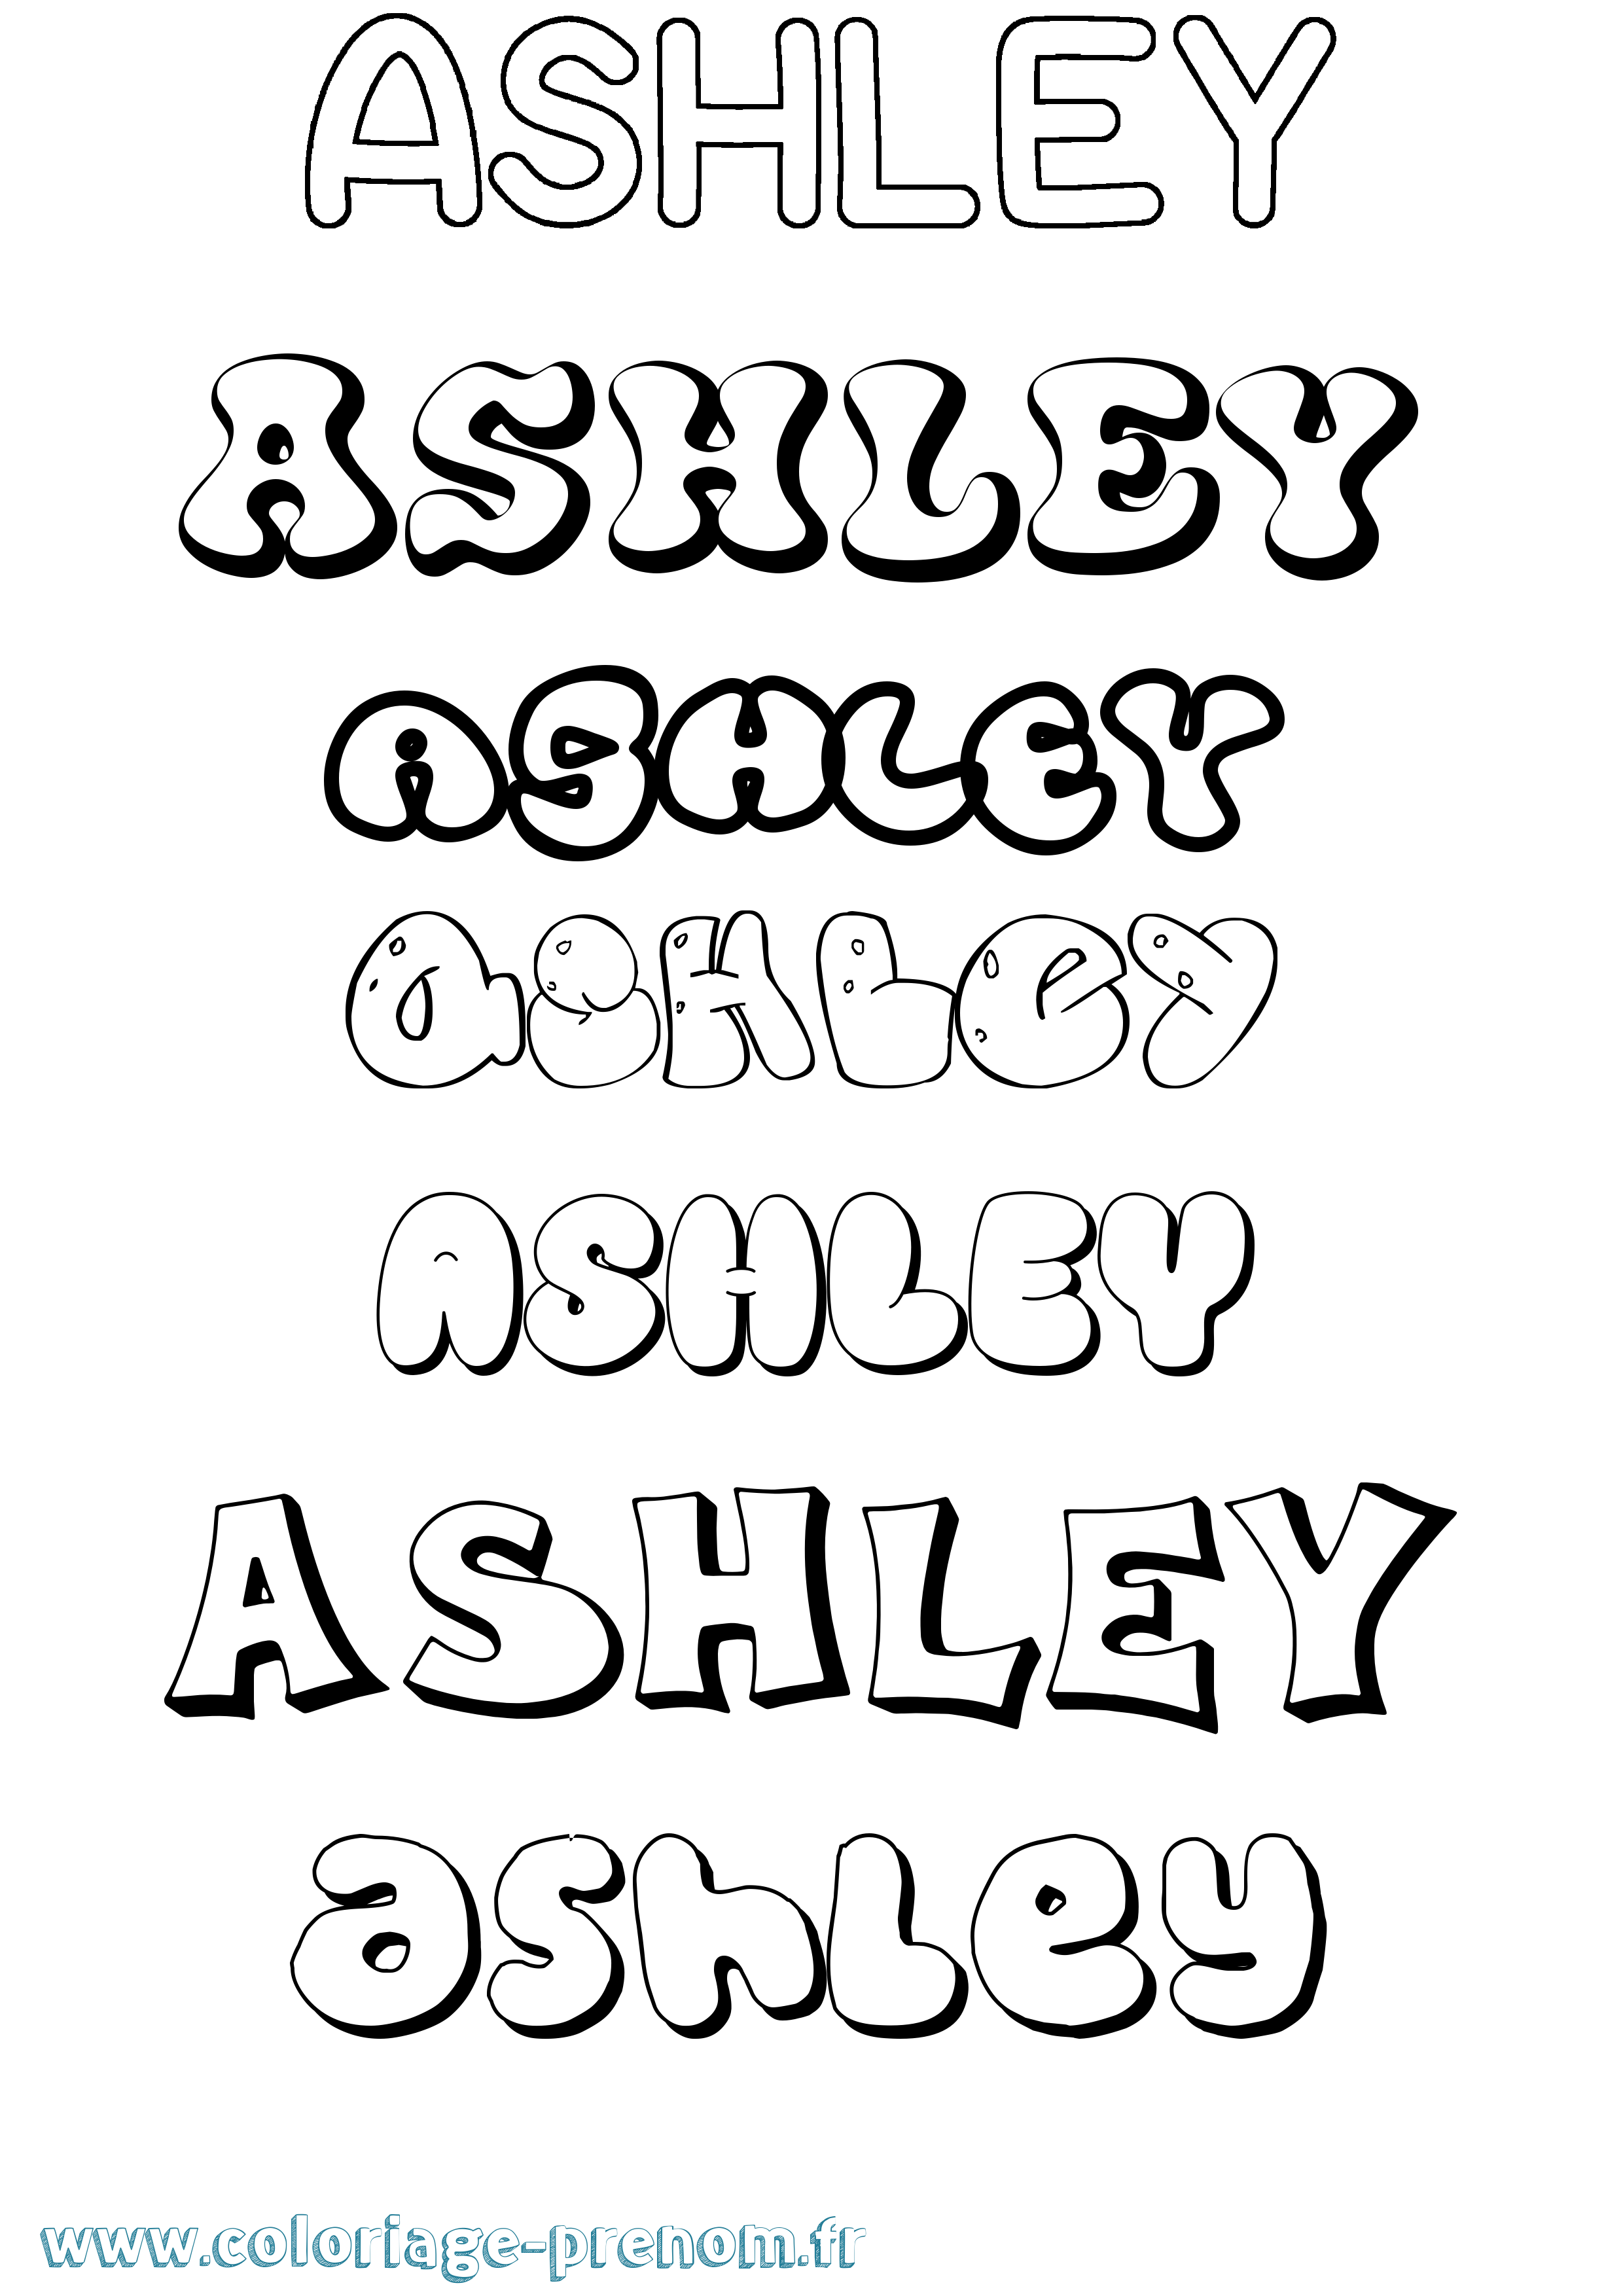 Coloriage prénom Ashley